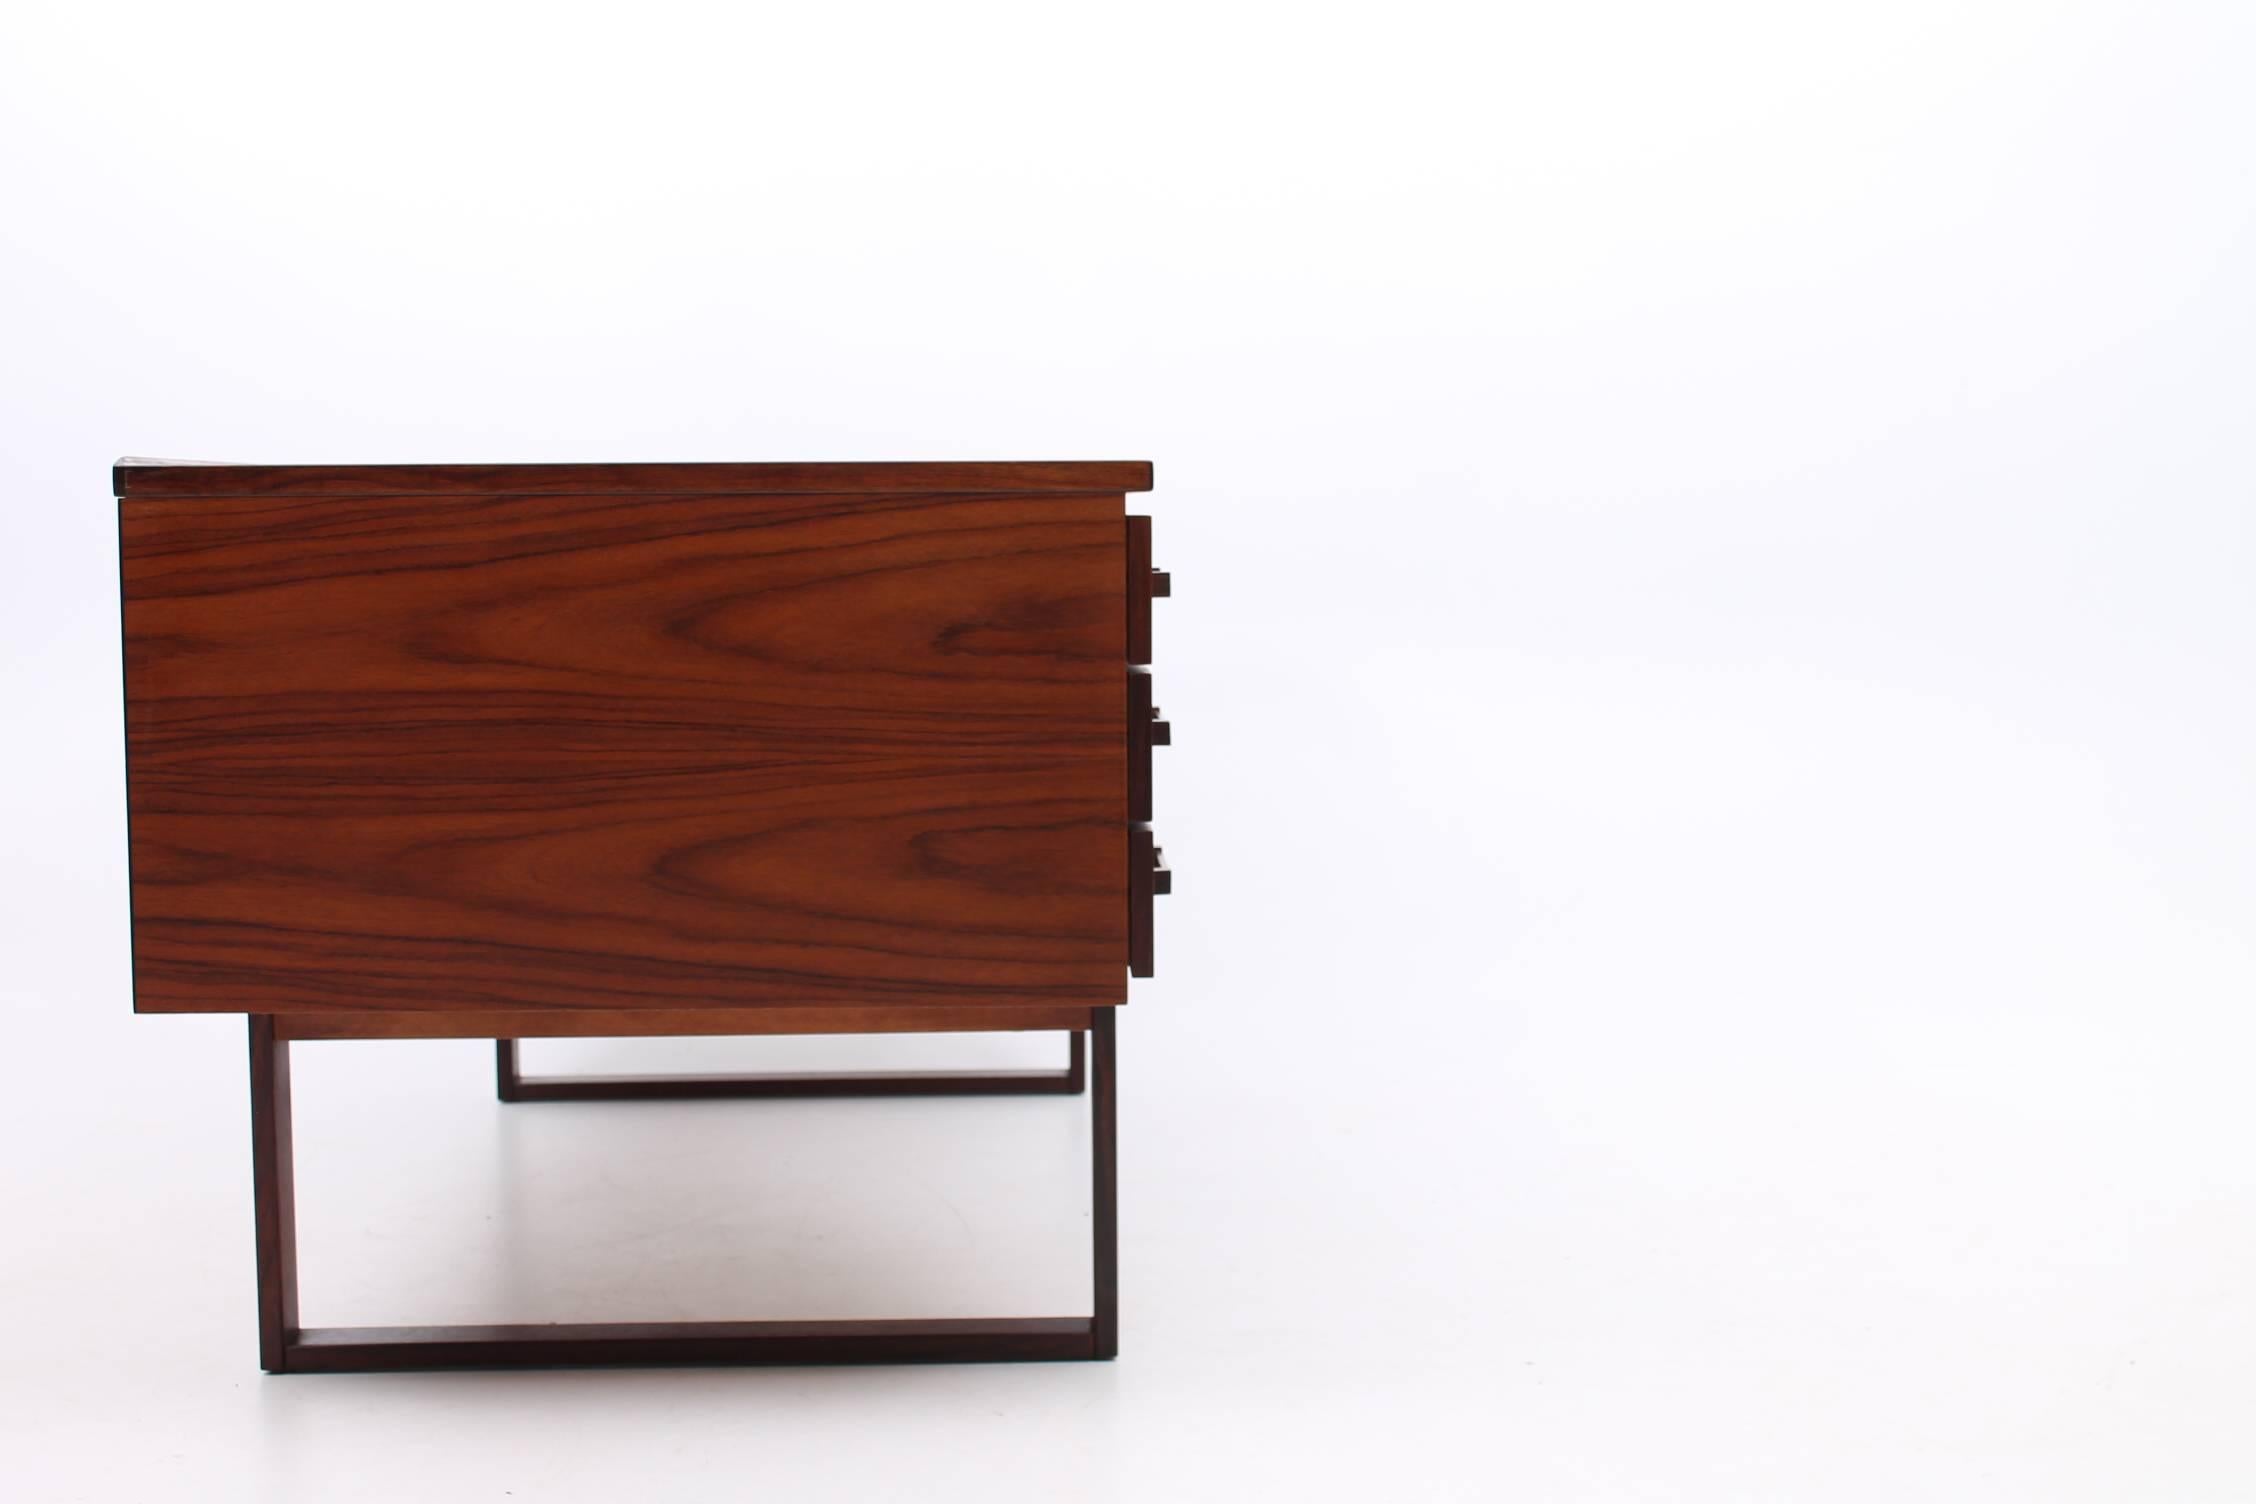 Late 20th Century Rosewood Desk by Preben Schou Andersen for PSA Furniture, Scandinavian Modern